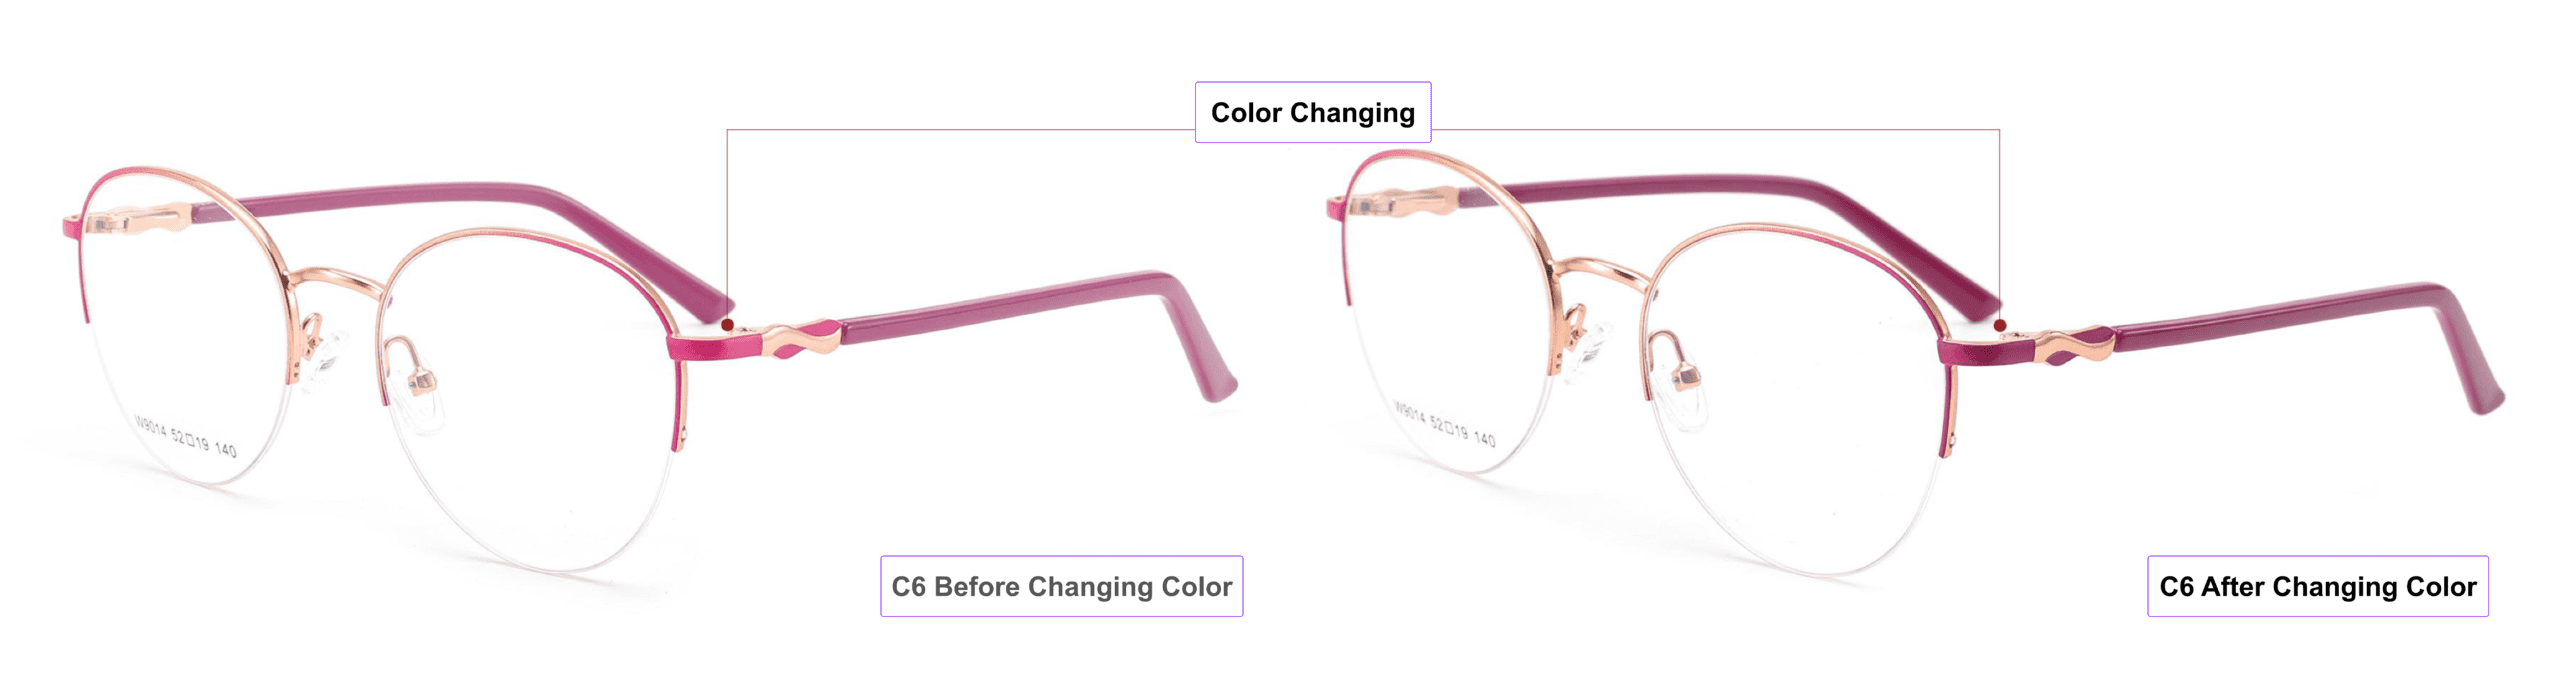 UV-activated Color Changing Glasses Frames, burgundy, rose gold, pink, process of color changing